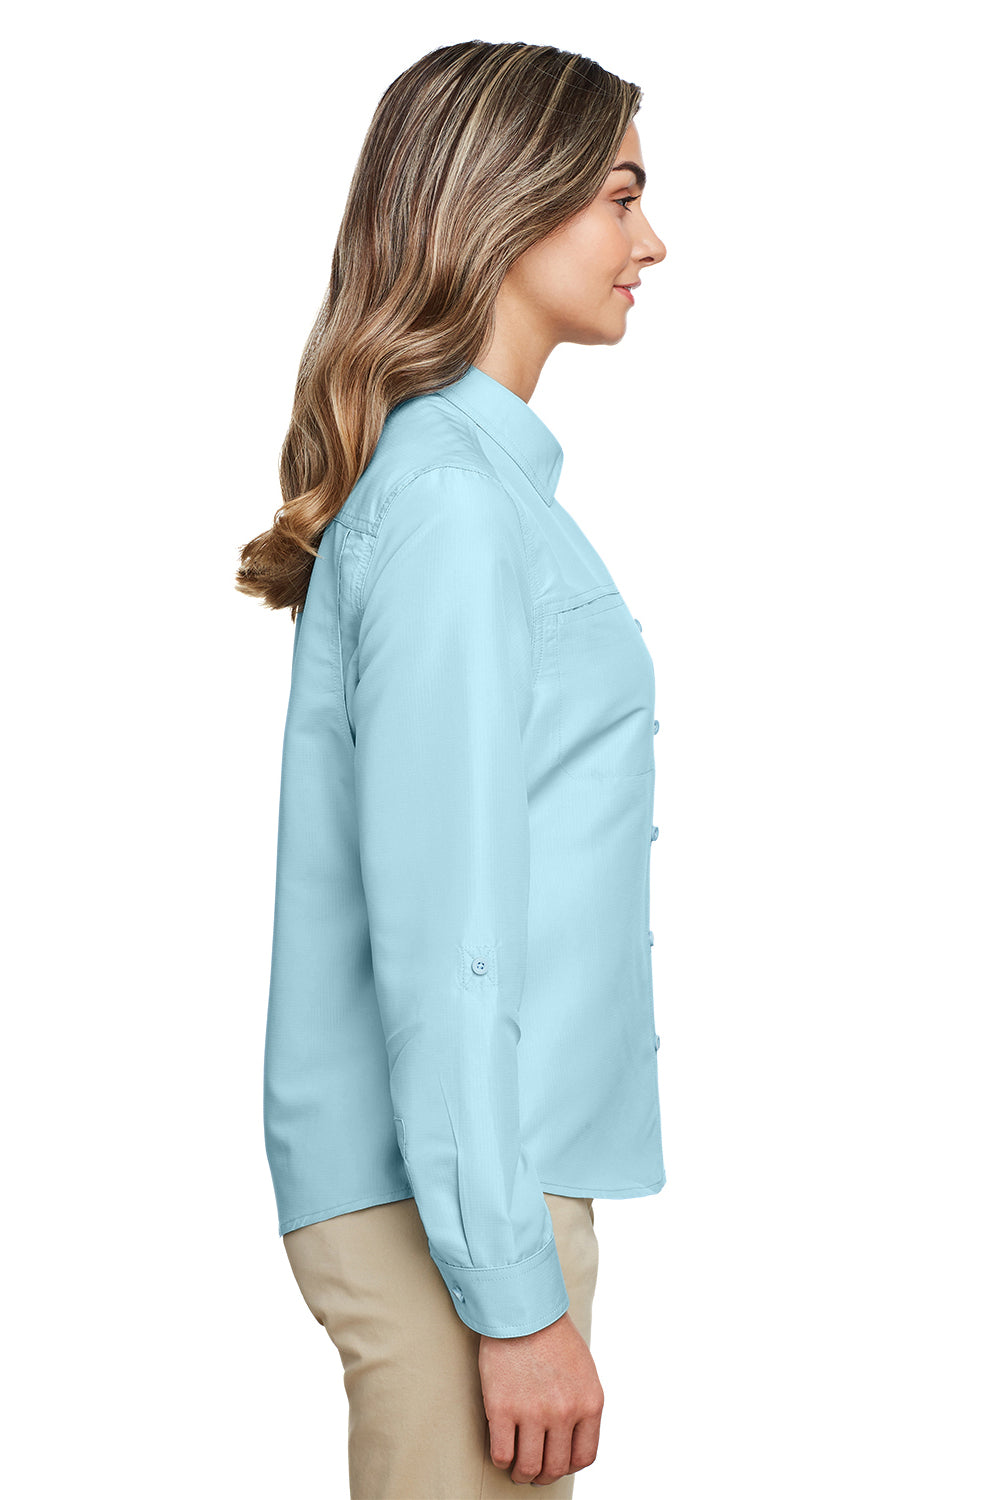 Harriton M580LW Womens Key West Performance Moisture Wicking Long Sleeve Button Down Shirt Cloud Blue Side